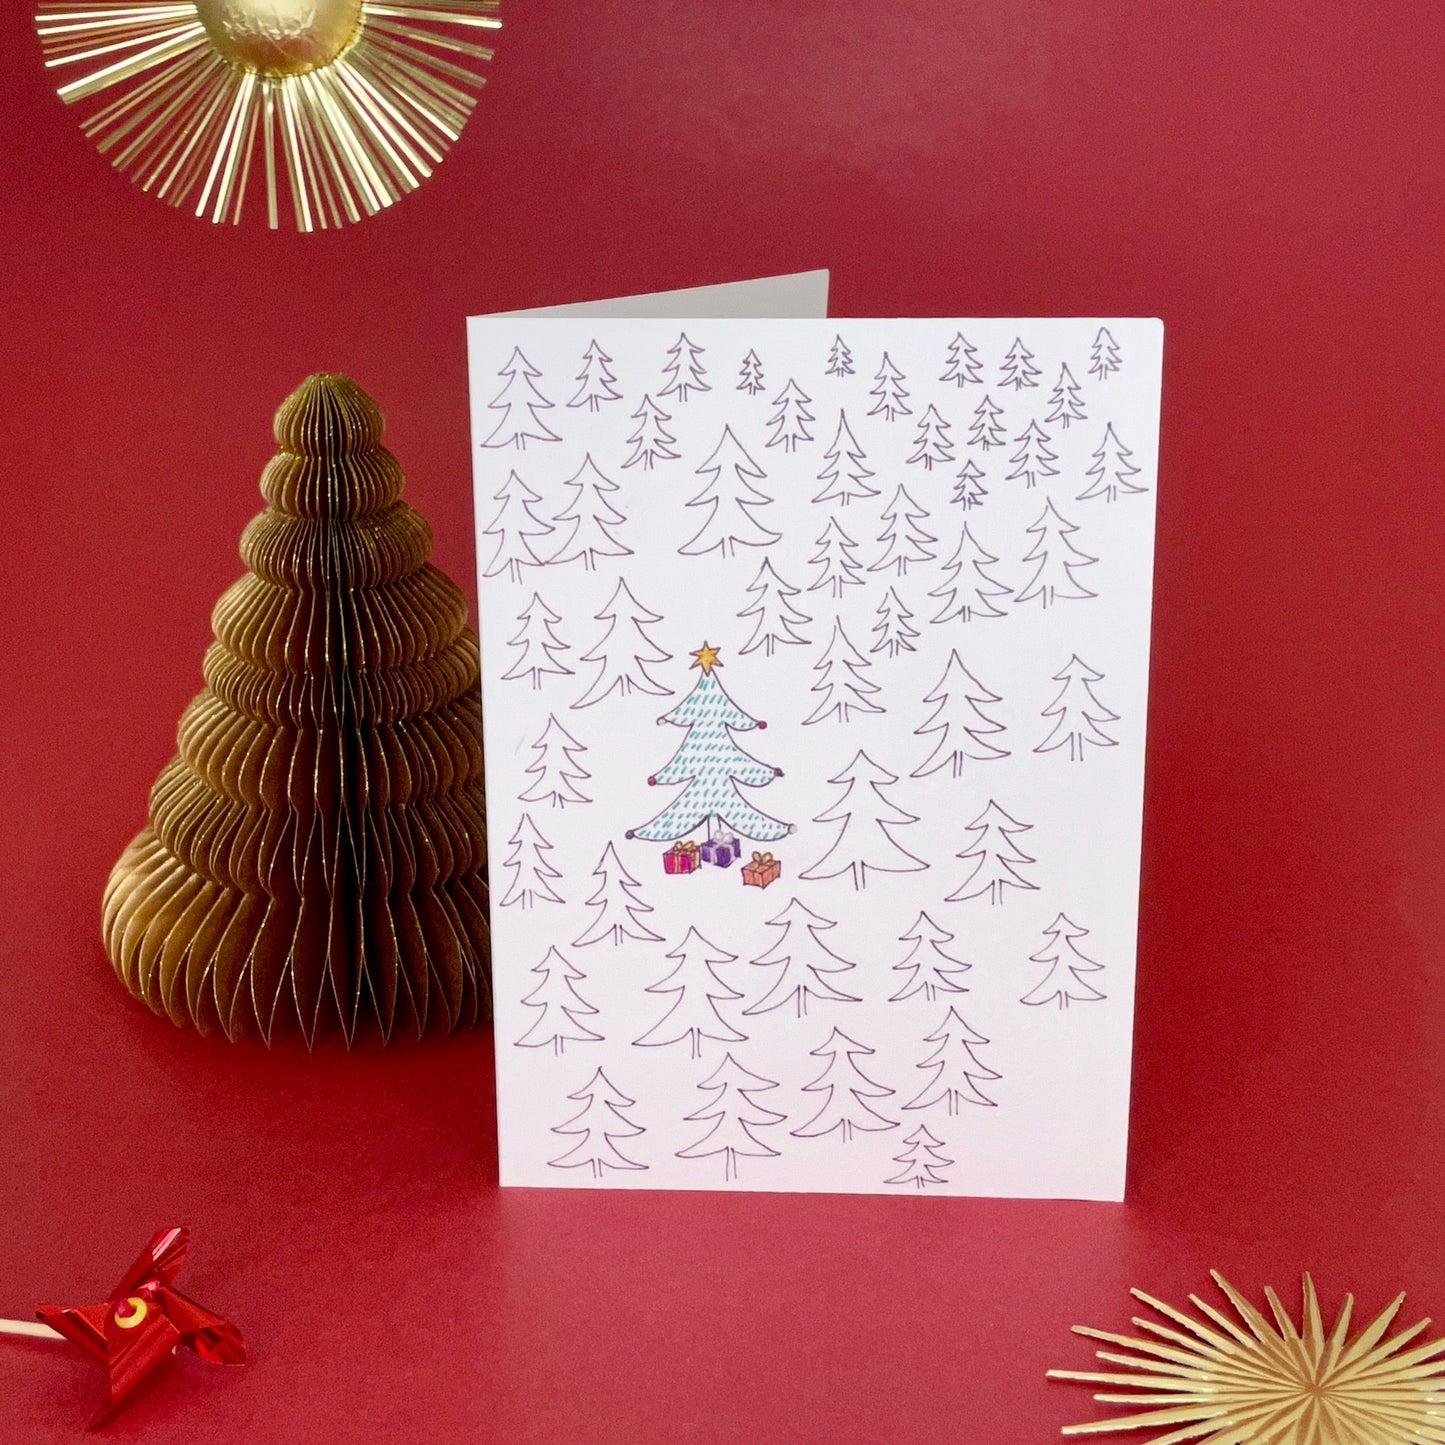 Festive Fir Tree Card by Olivia Bishop